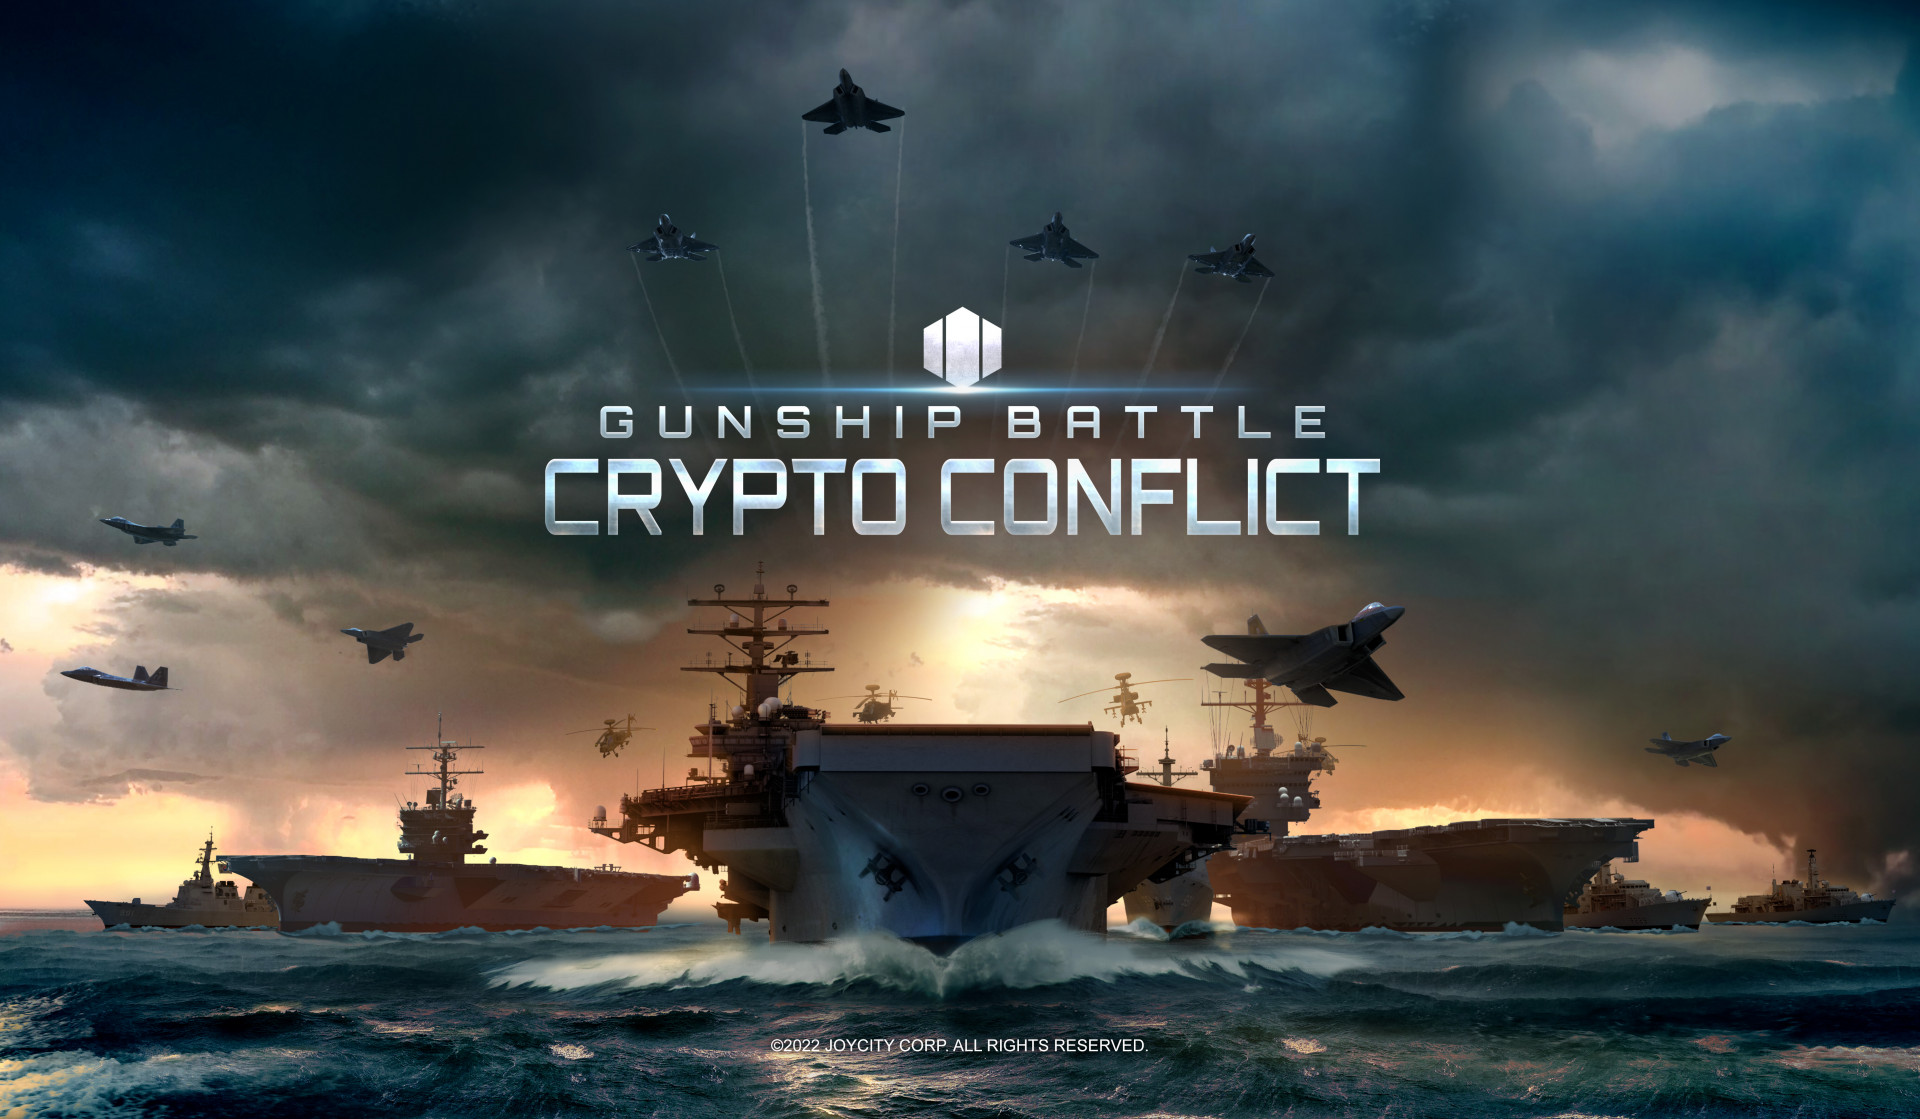 JOYCITY’s ‘Gunship Battle: Crypto Conflict’ holds Global Pre-Registration for Launch on Both Major Mobile Stores